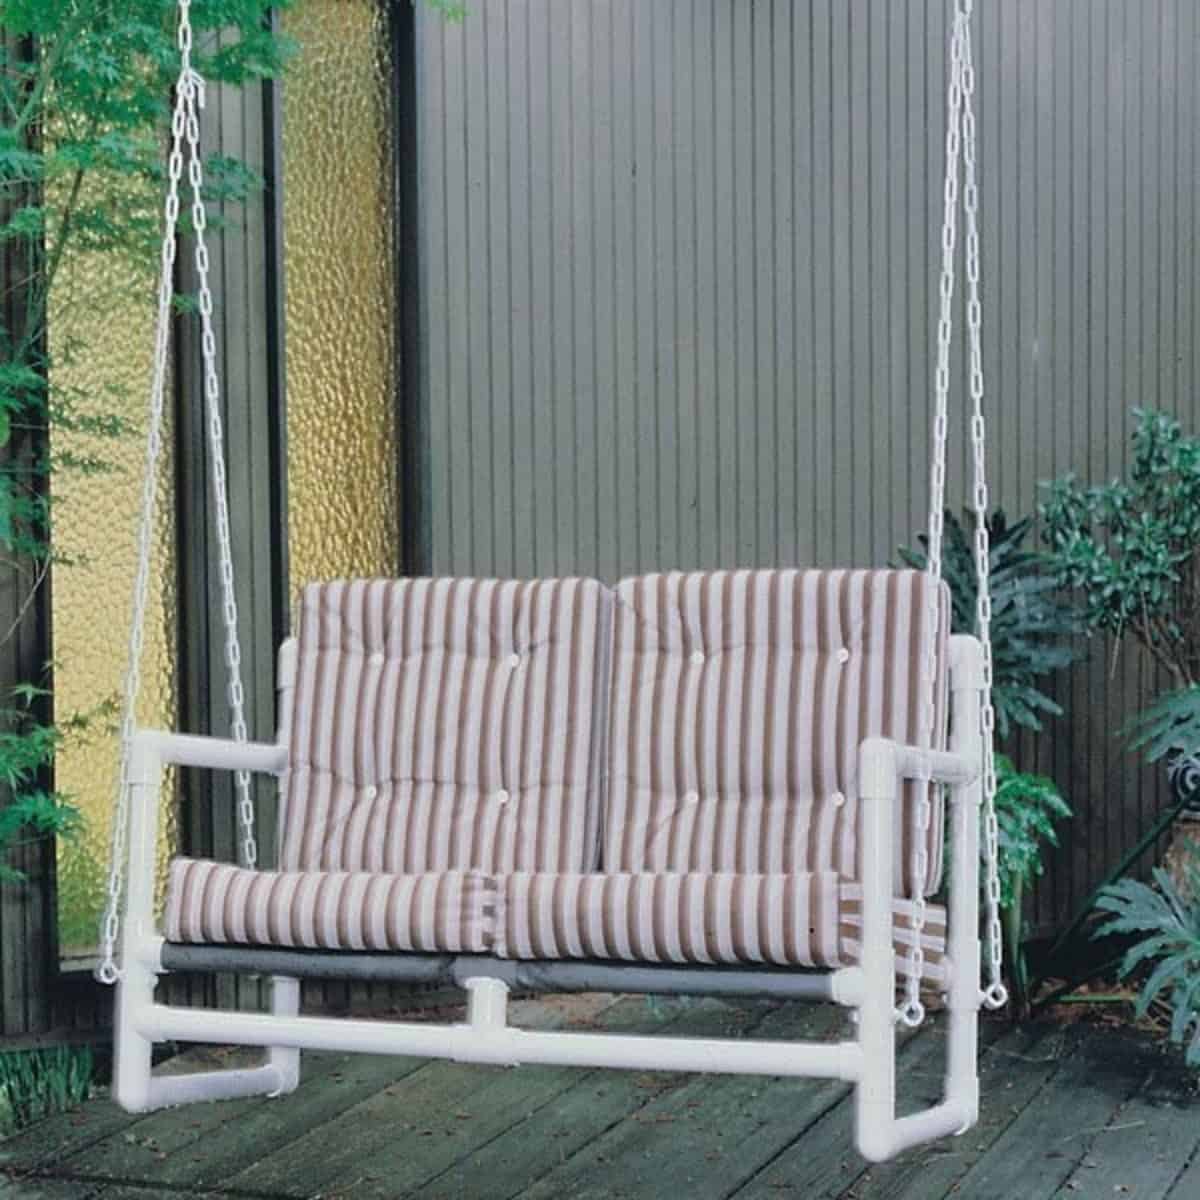 DIY PVC Pipe Porch Swing Plans